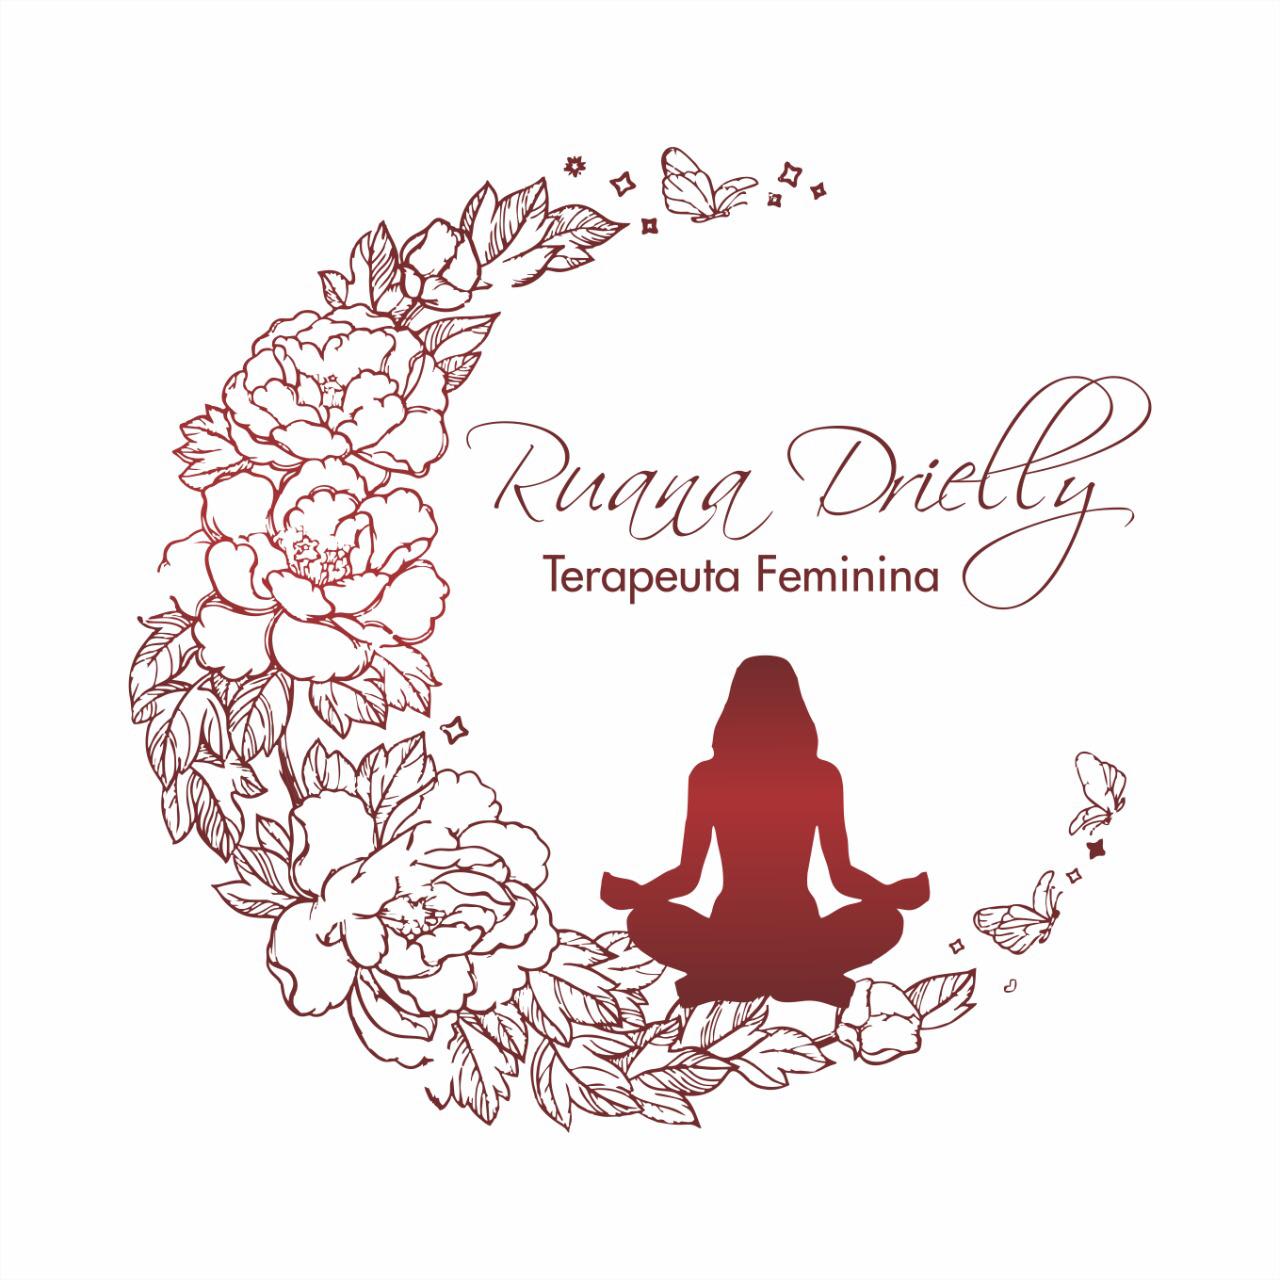 Ruana Drielly | Terapeuta Feminina